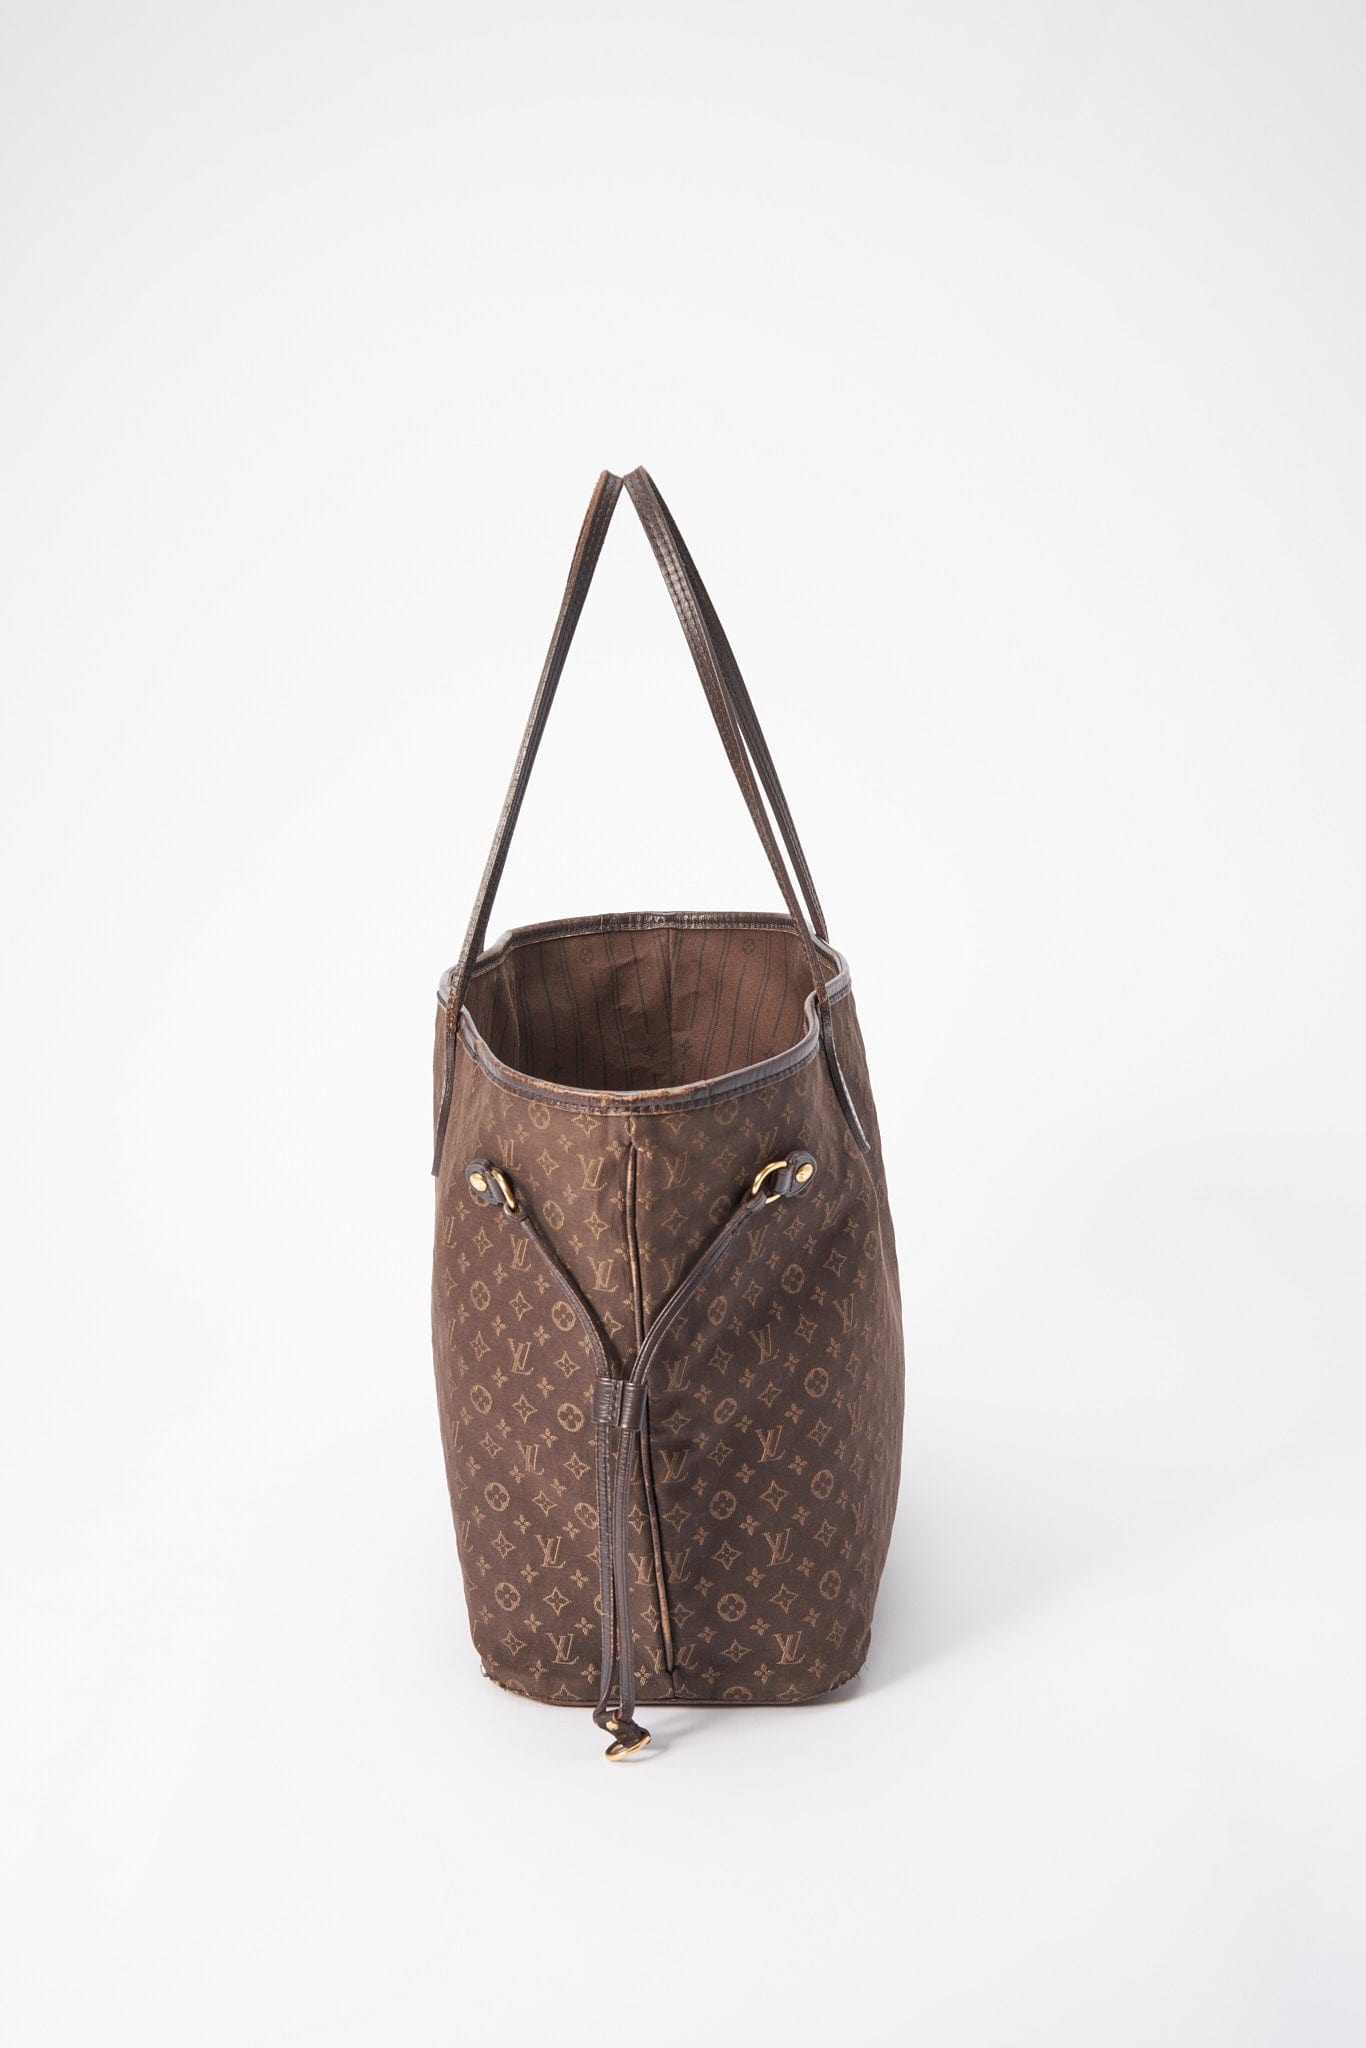 Louis Vuitton Neverfull Monogram Handbag